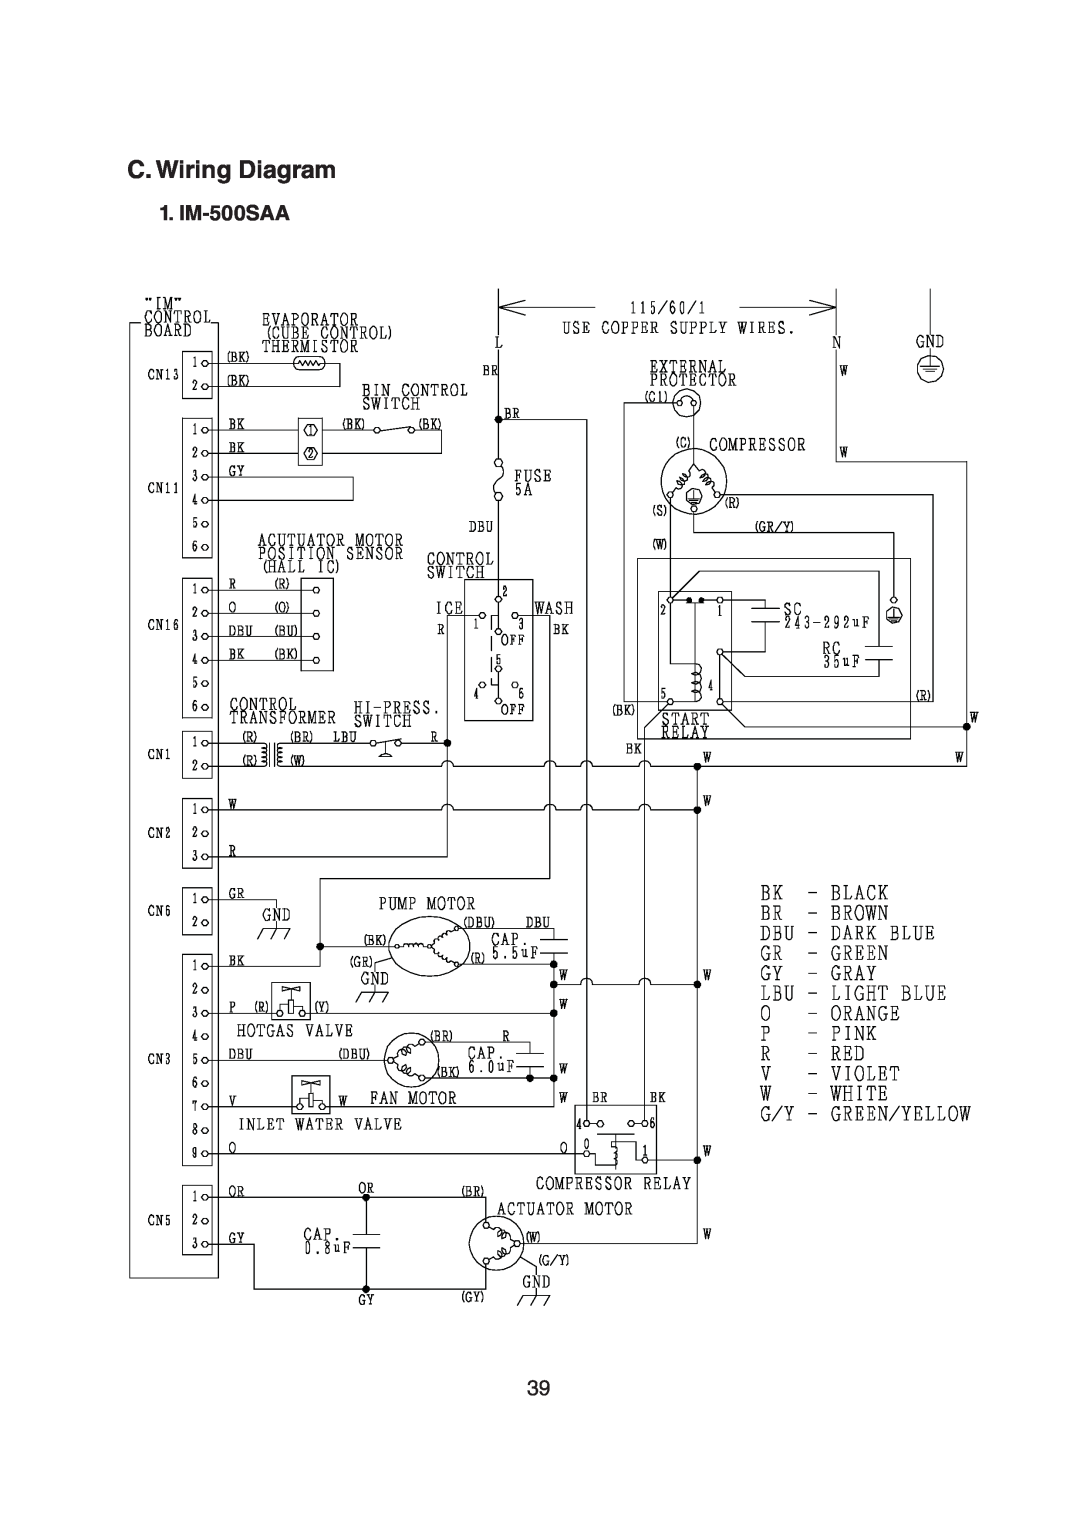 Hoshizaki M029-897 service manual C. Wiring Diagram, IM-500SAA 